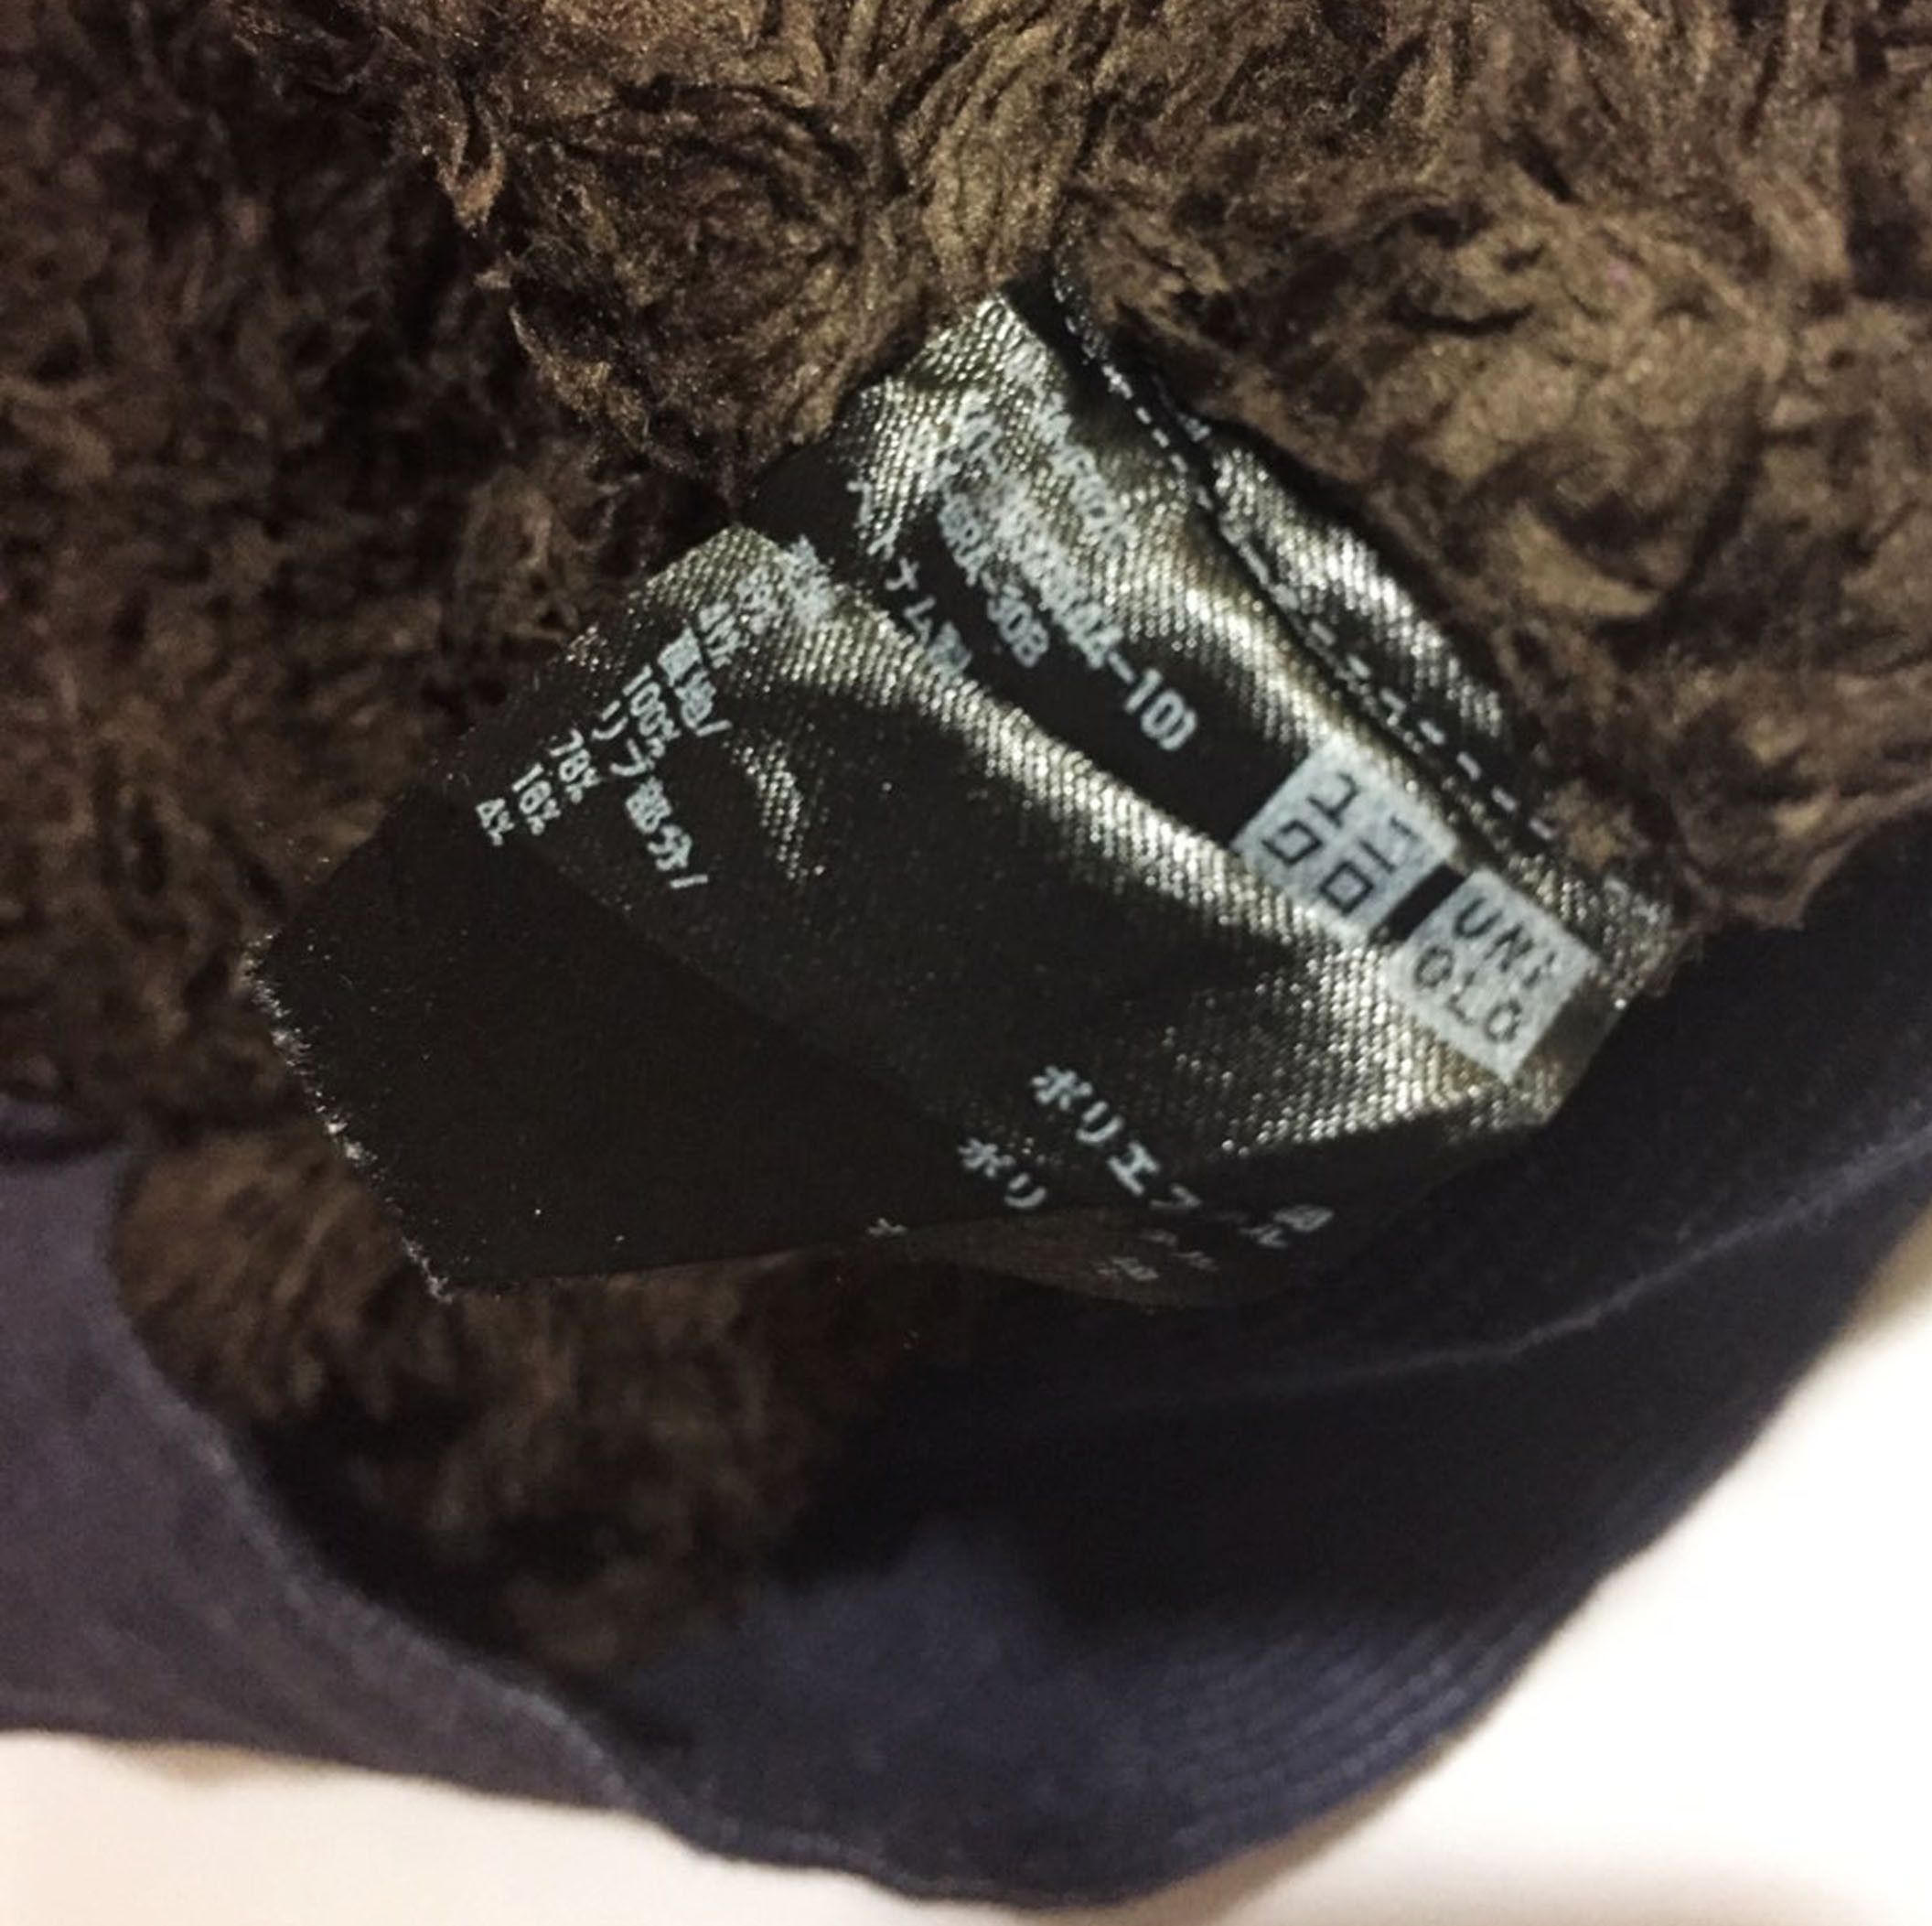 Uniqlo Fur Fleece Inside Hoodie Jacket Size US S / EU 44-46 / 1 - 5 Thumbnail